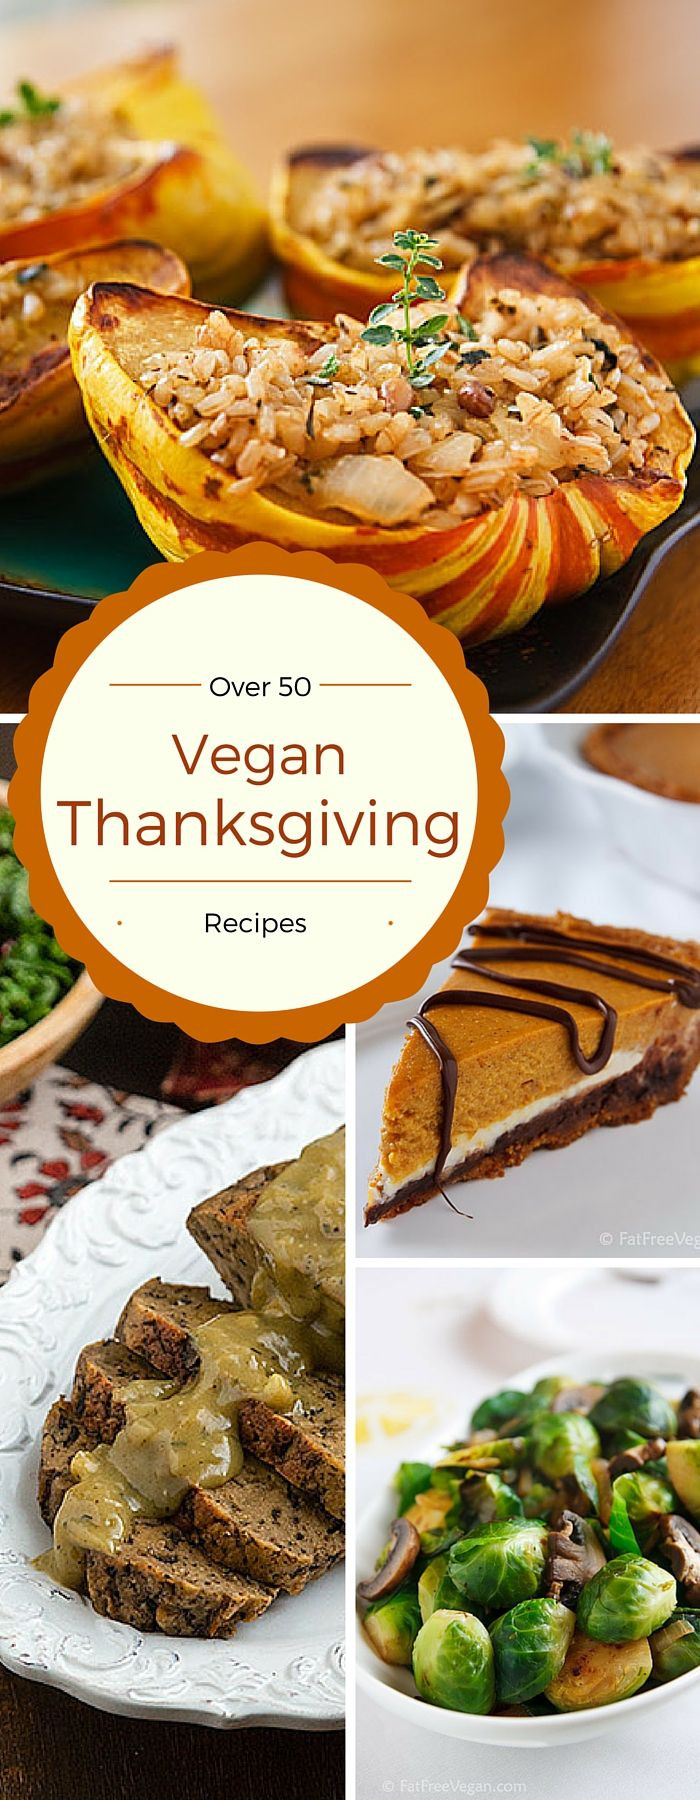 Vegan Recipes For Thanksgiving Dinner
 Check out vegan pumpkin cheesecake stuffed squash seitan